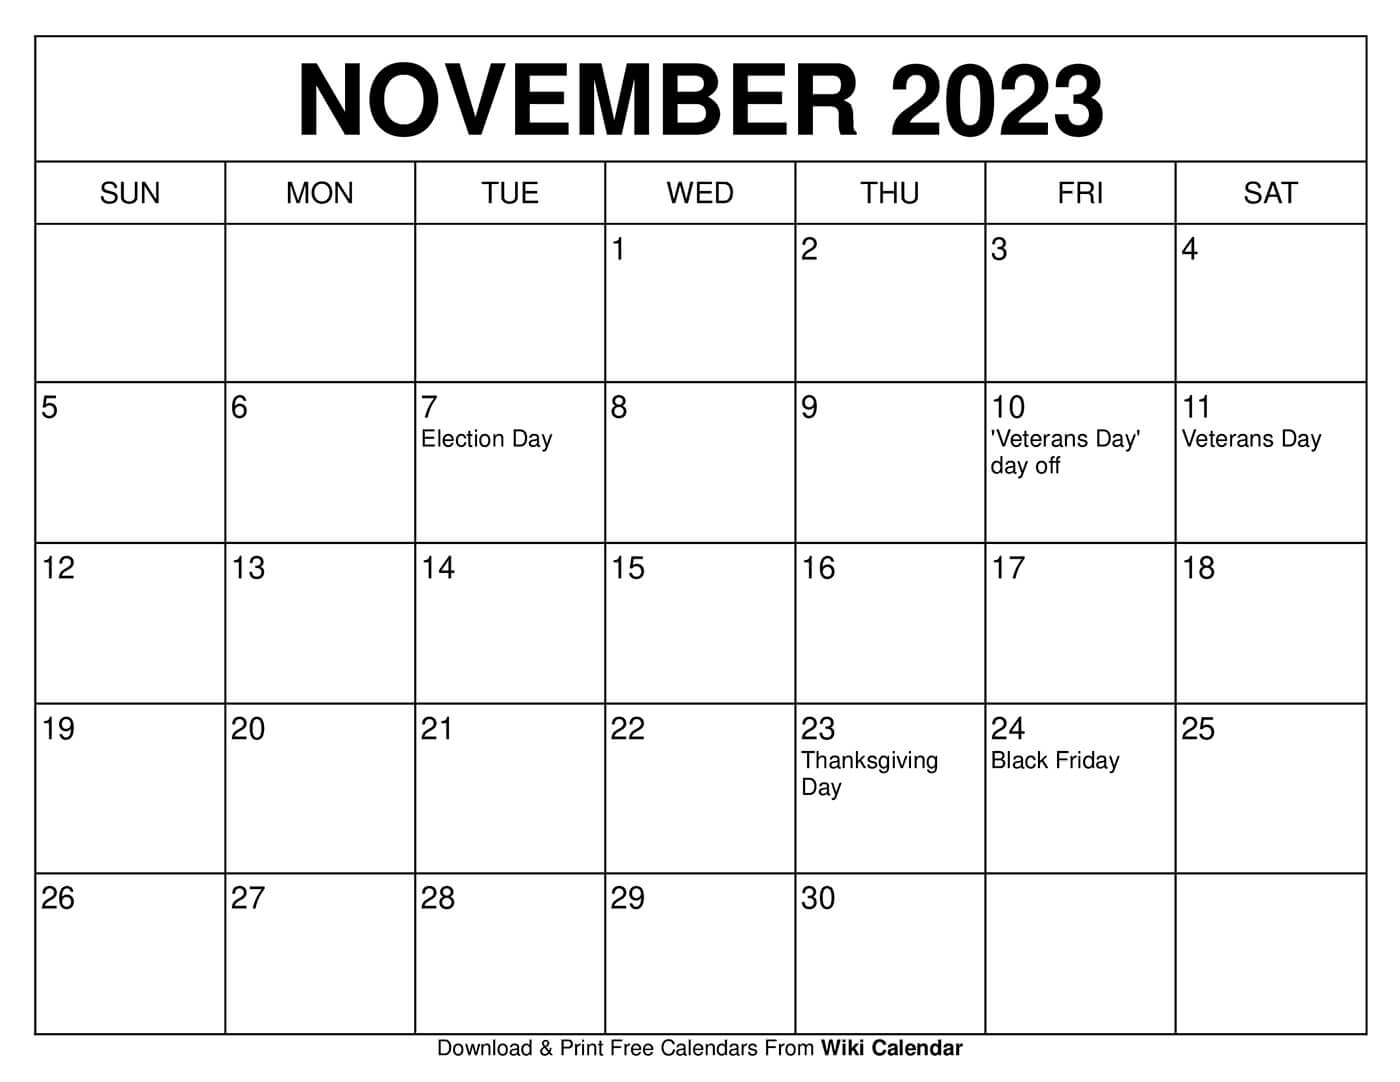 free-printable-november-2023-calendars-wiki-calendar